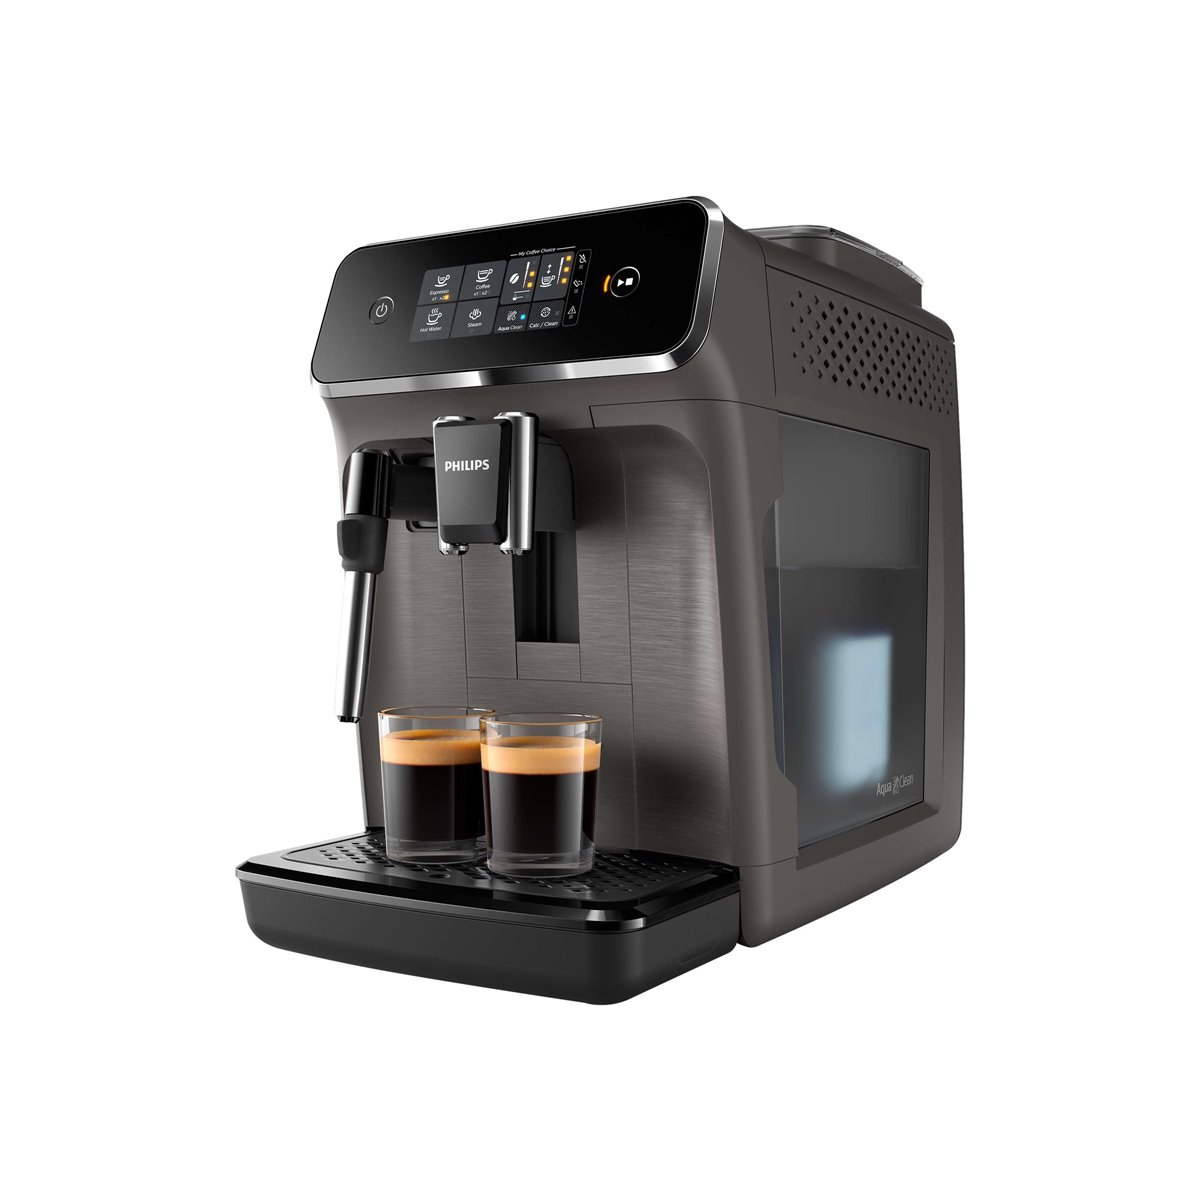 Philips Series 2200 EP2224/10 - Espresso machine - 1.8 L - Coffee beans - Built-in grinder - 1500 W - Anthracite